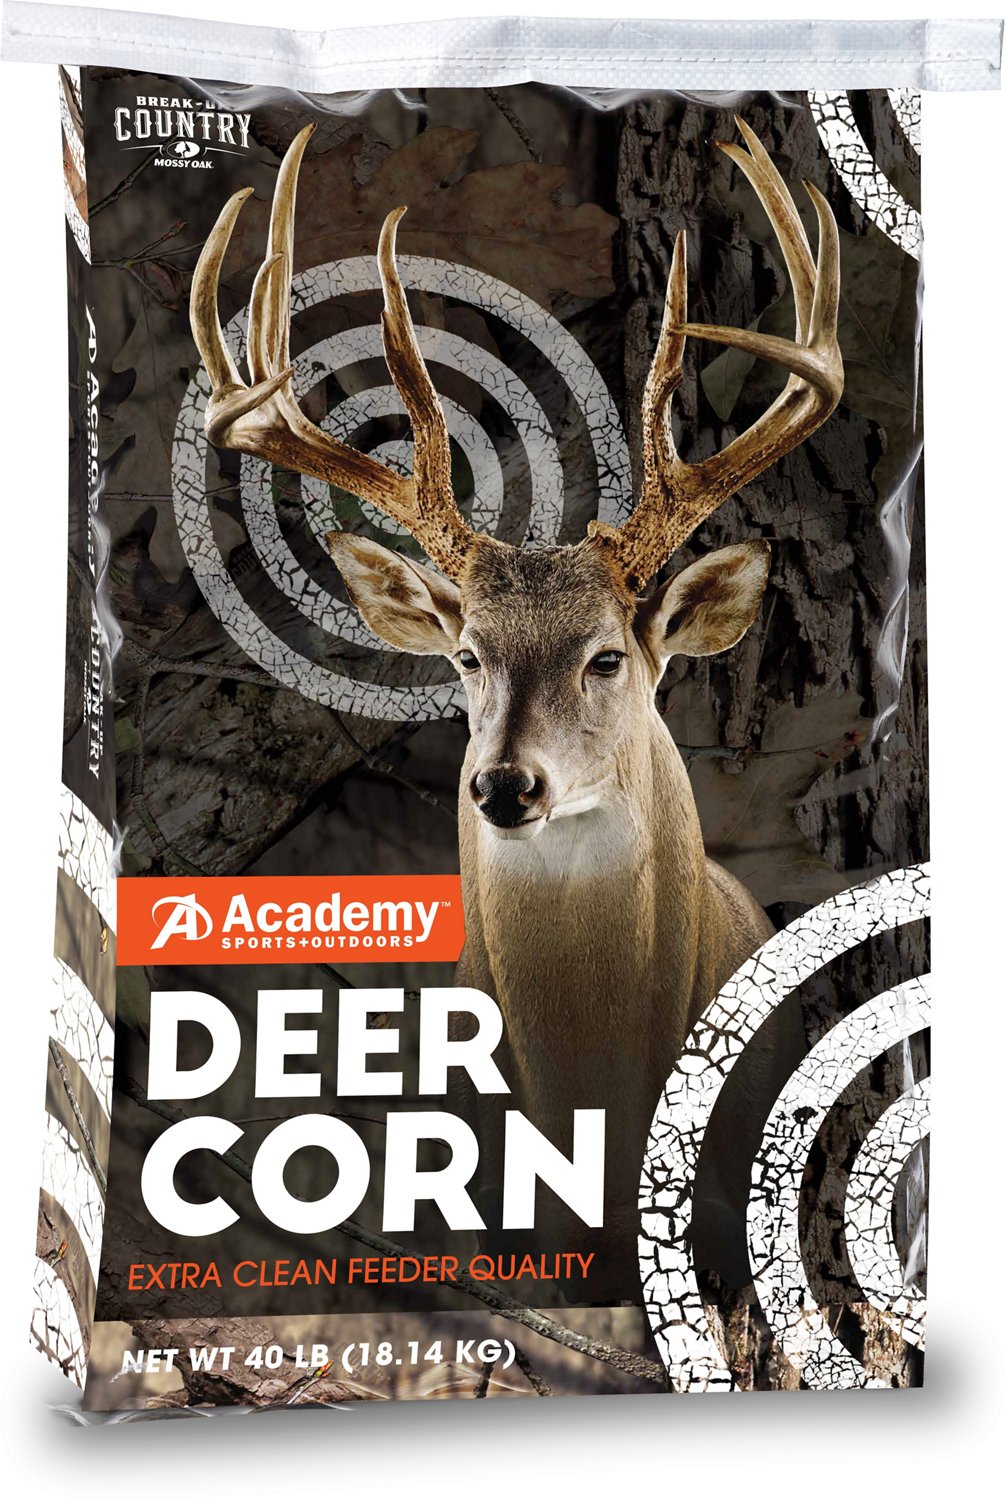 Academy Sports + Outdoors Deer Corn 40 lb Bag